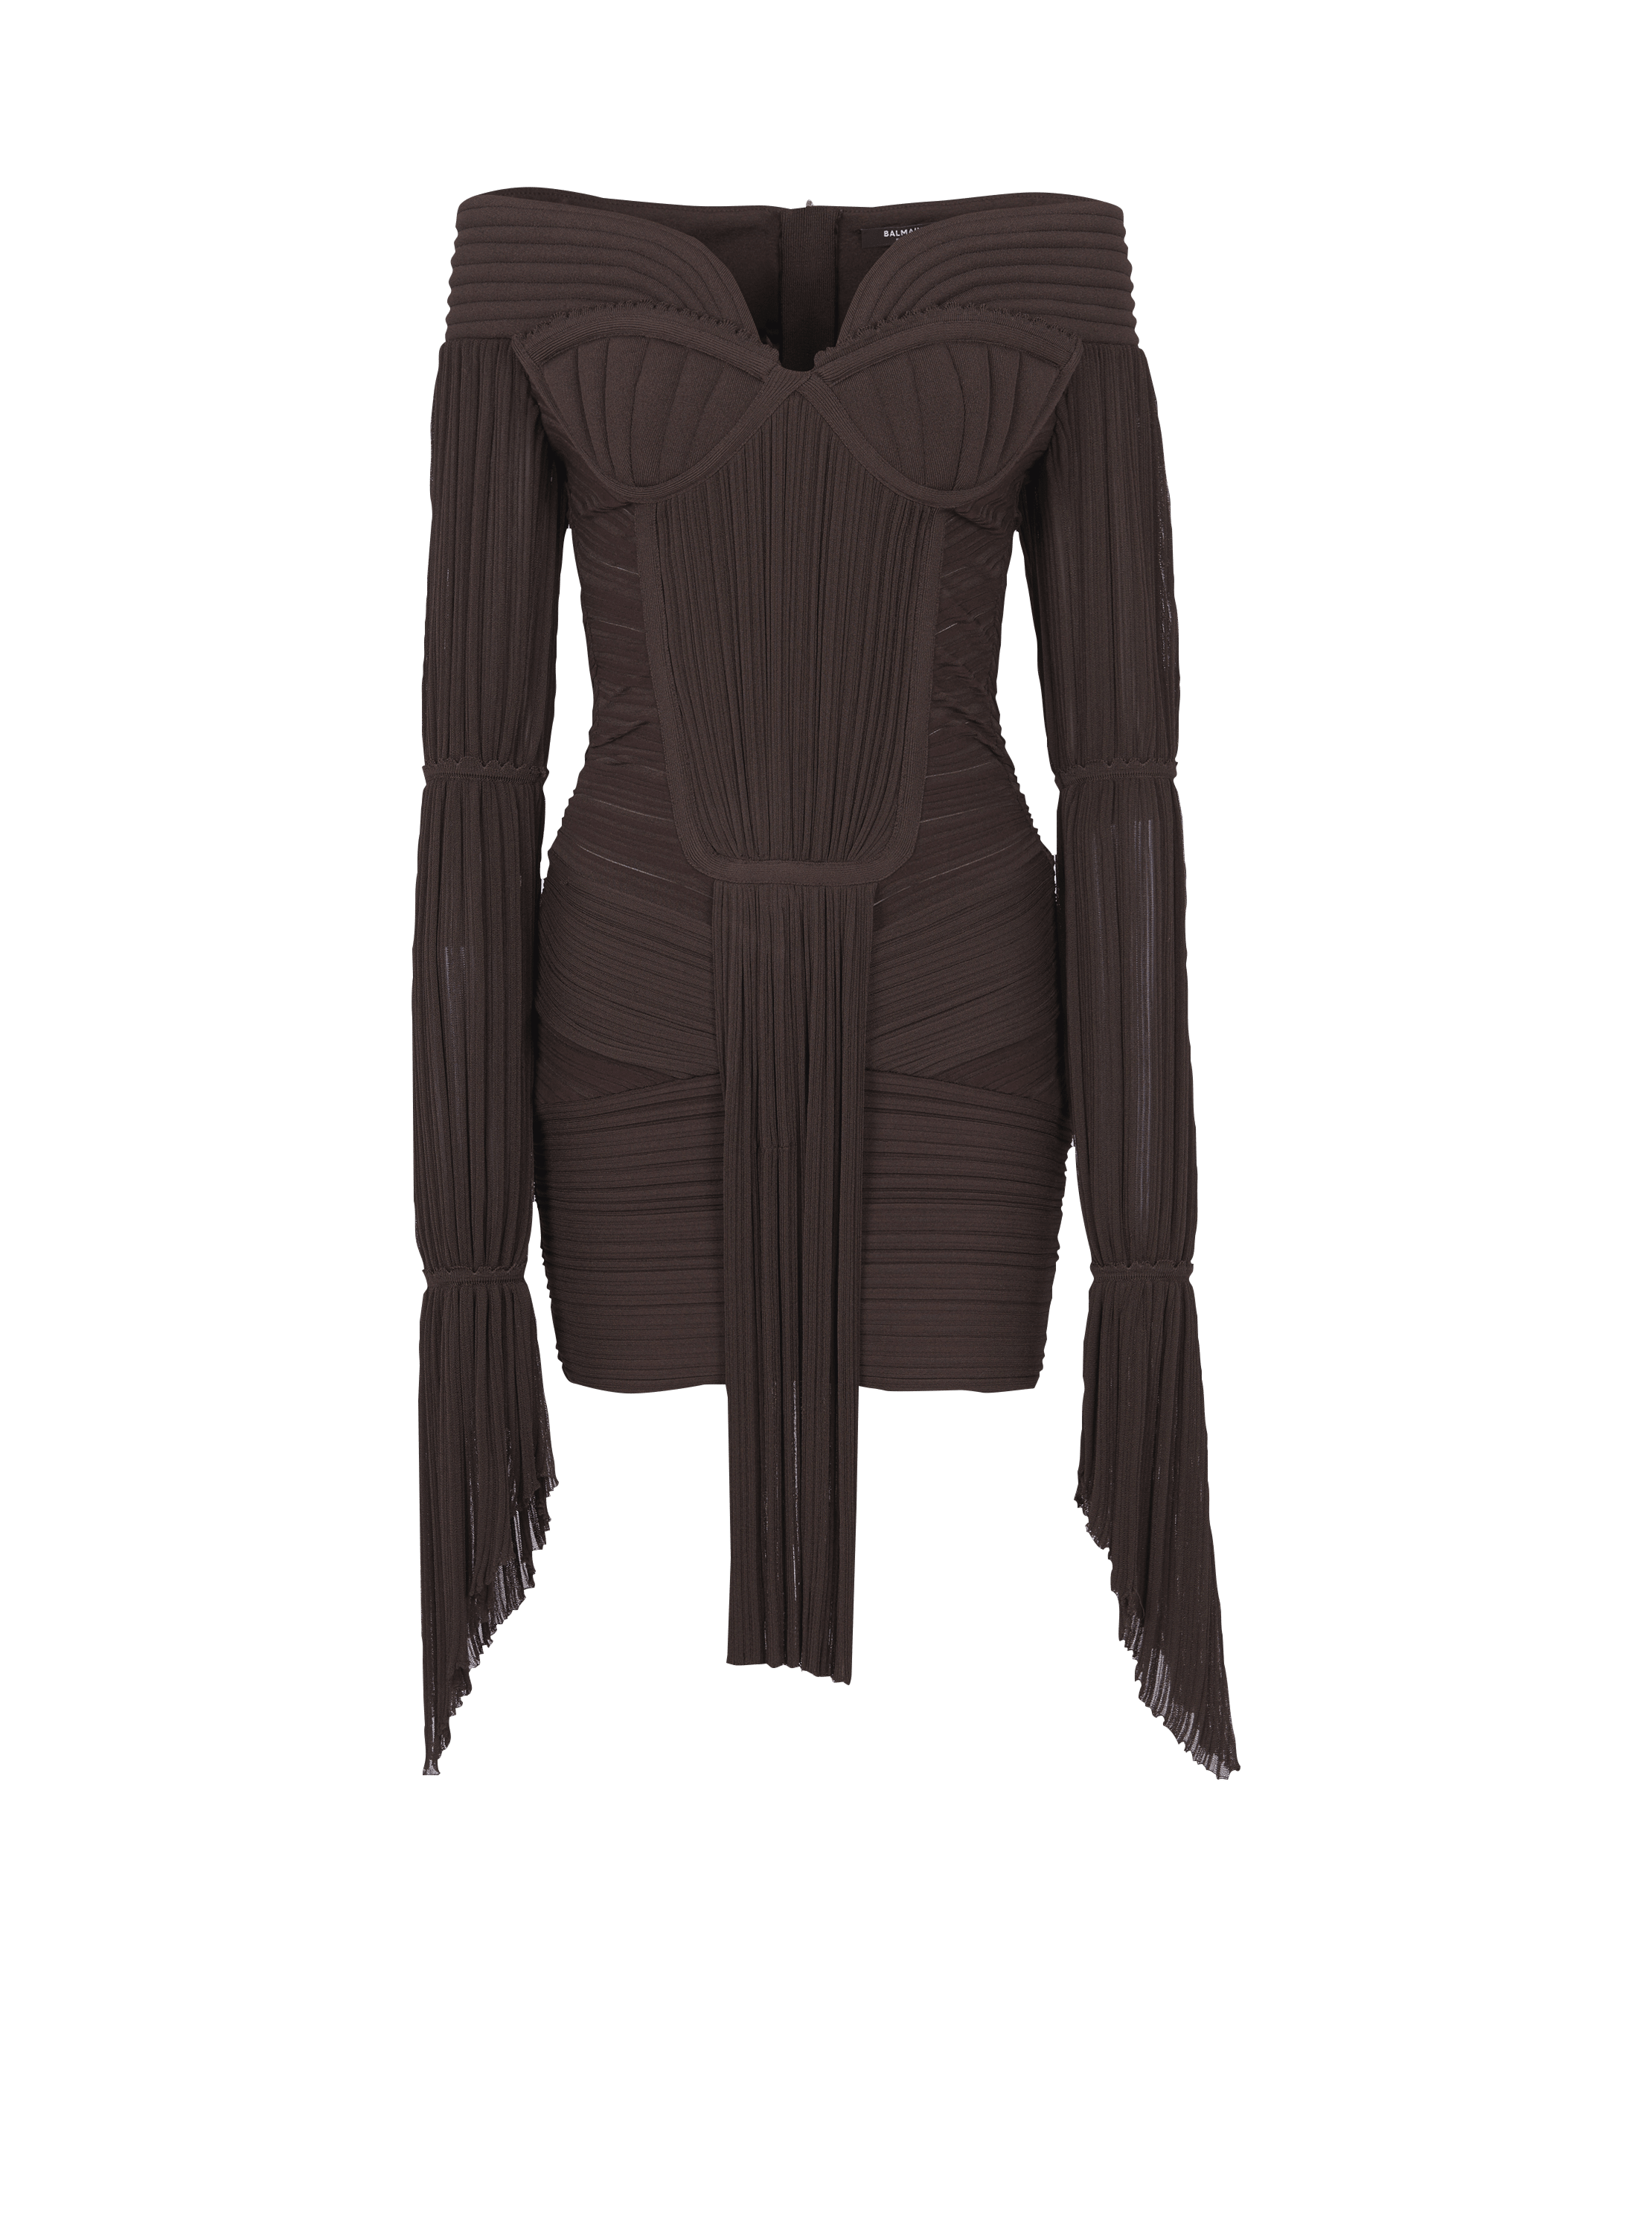 Kurzes drapiertes Kleid aus plissiertem Strick, braun, hi-res